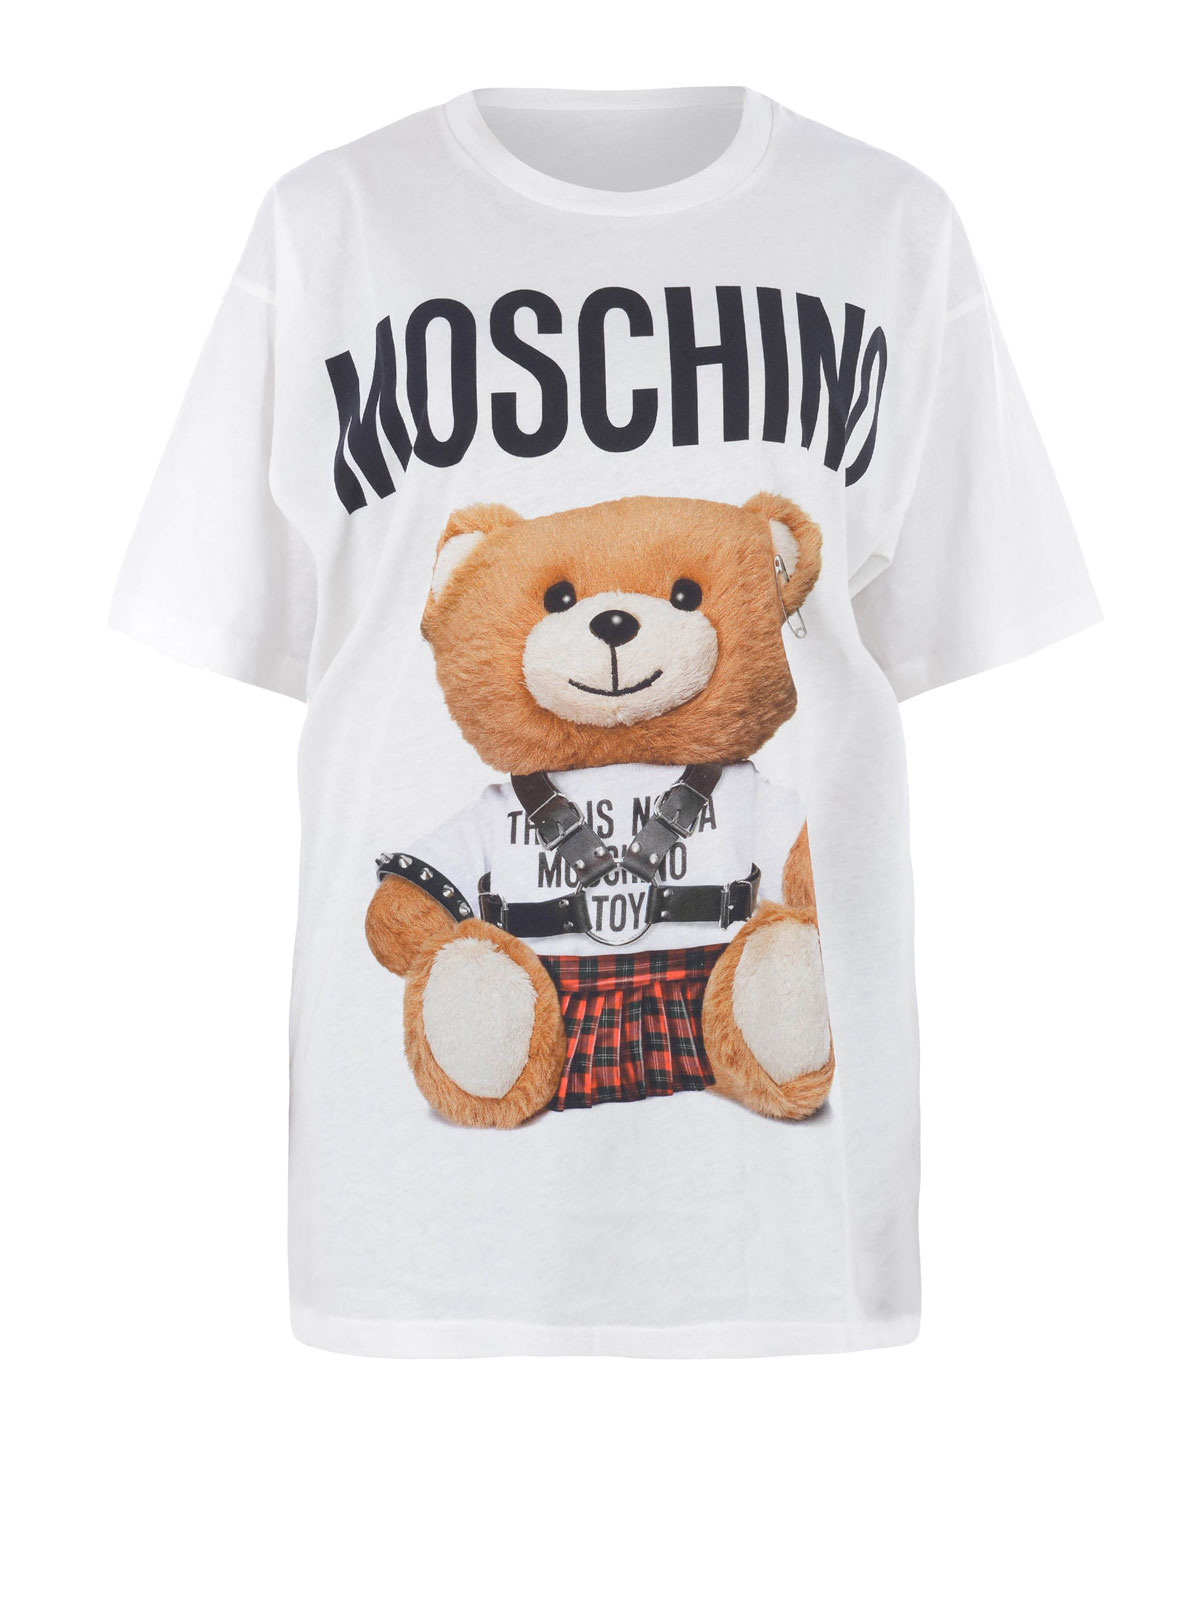 moschino t-shirt teddy